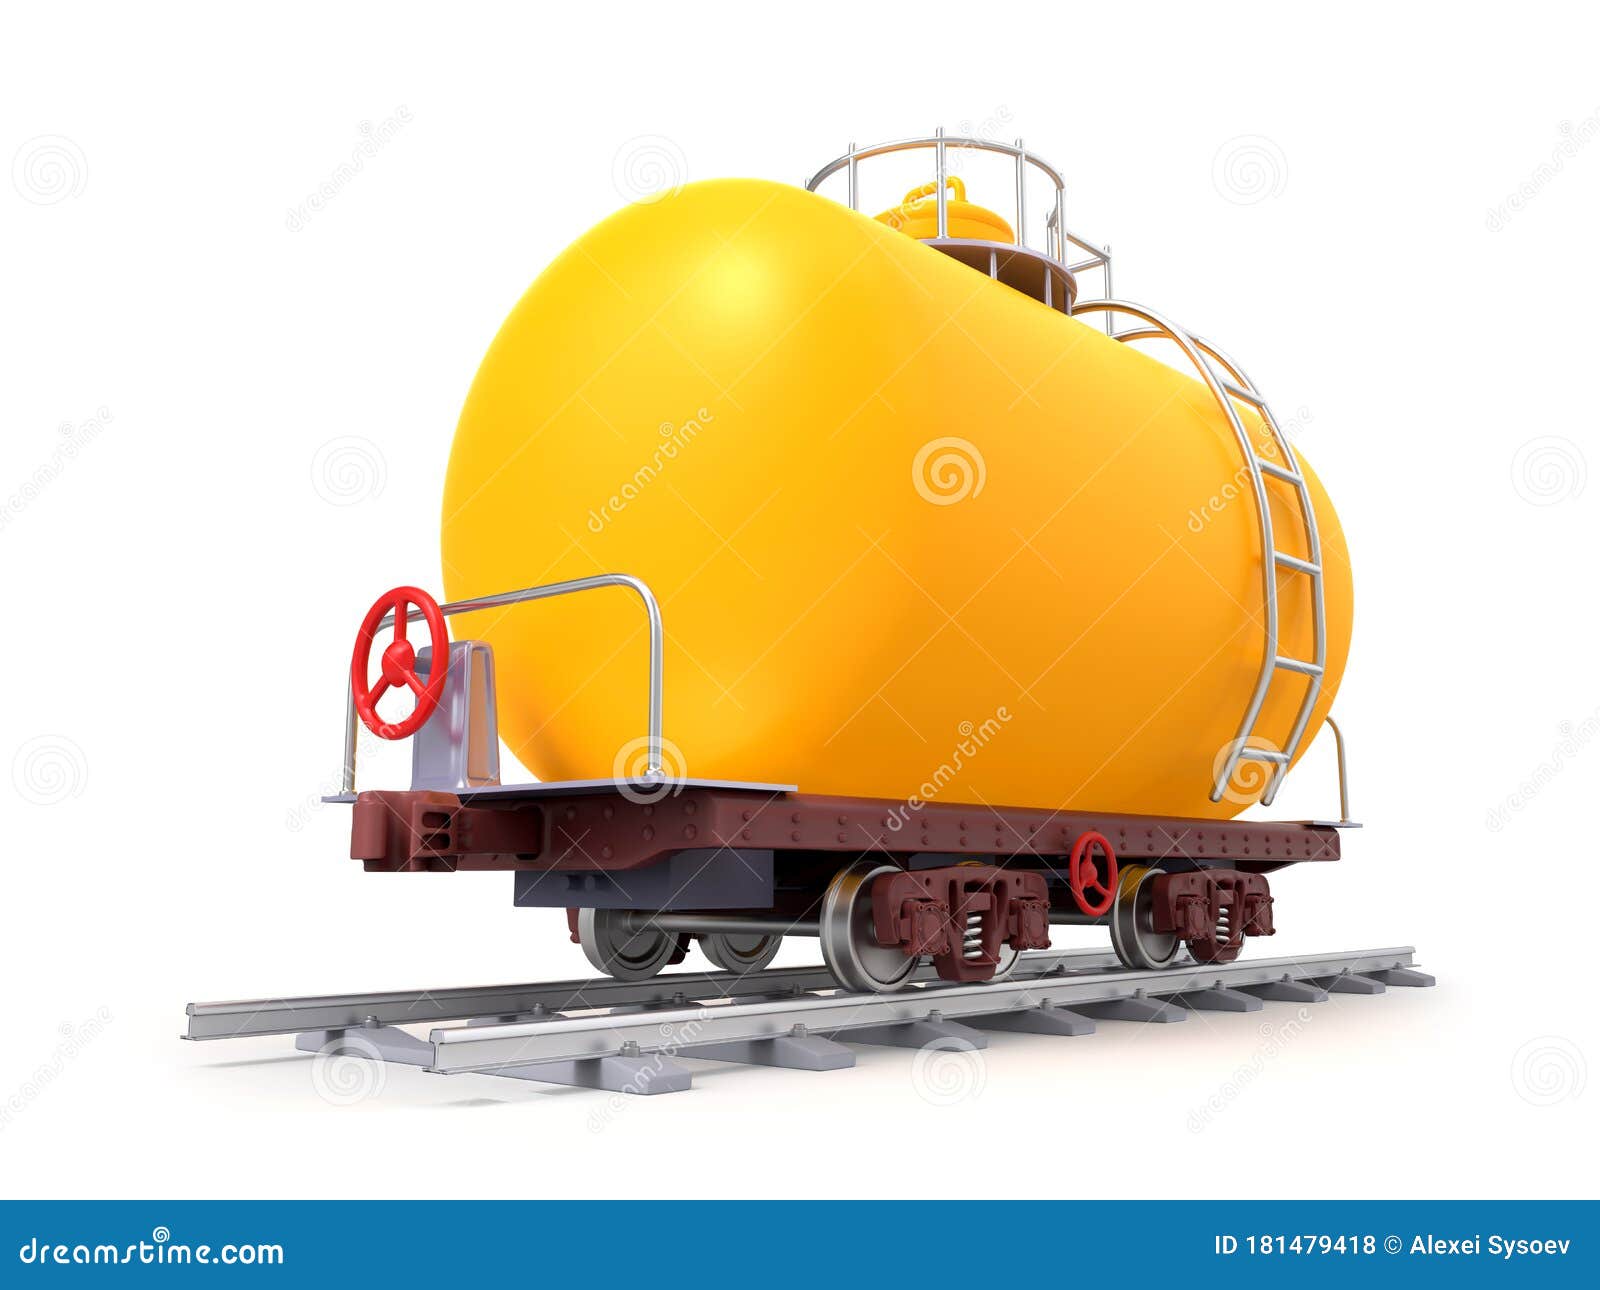 Railroad tank car cartoon stock illustration. Illustration of energy -  181479418